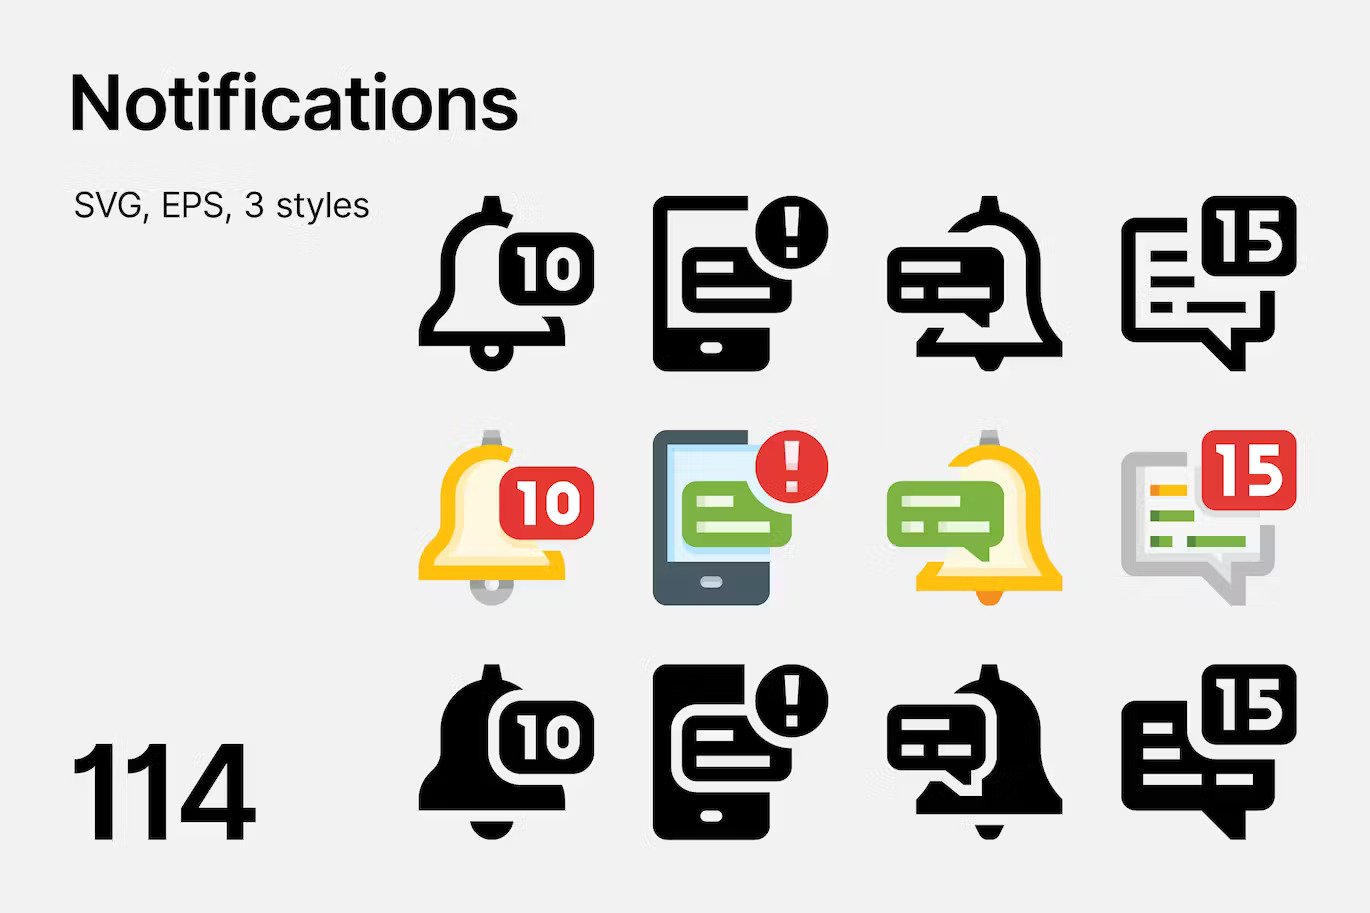 A notification icon set